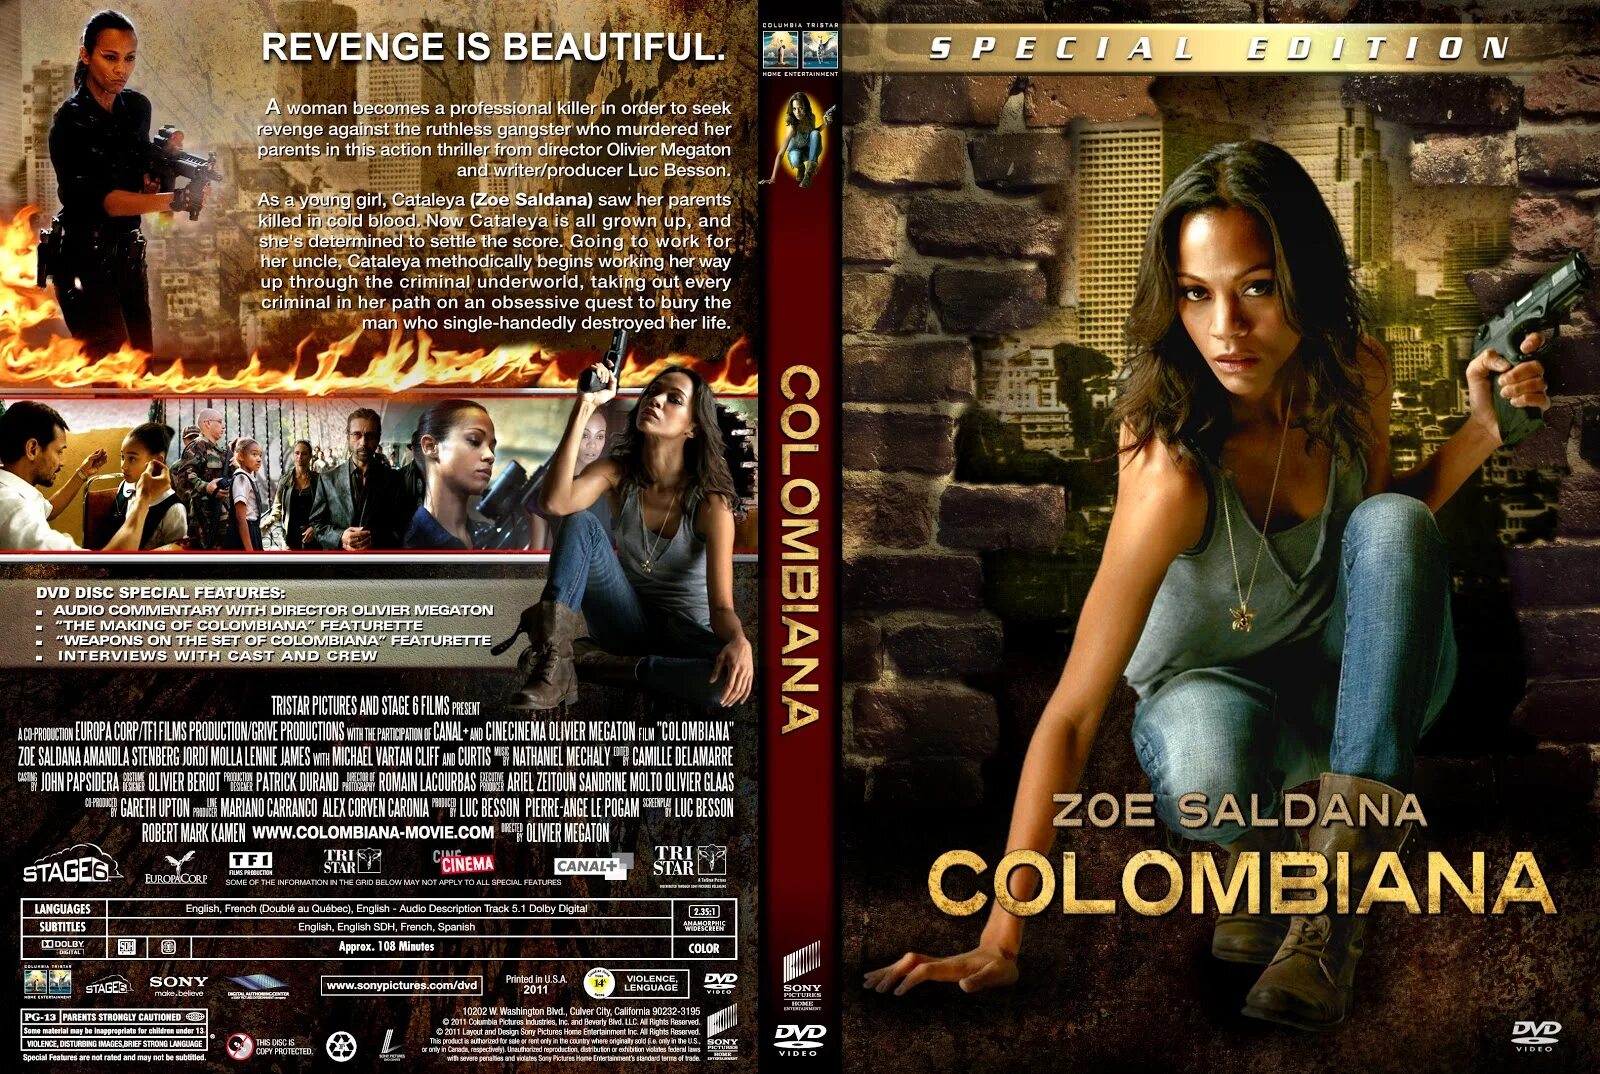 Seek revenge. Colombiana 2011 DVD Cover. Коломбиана 2011 Covers DVD.